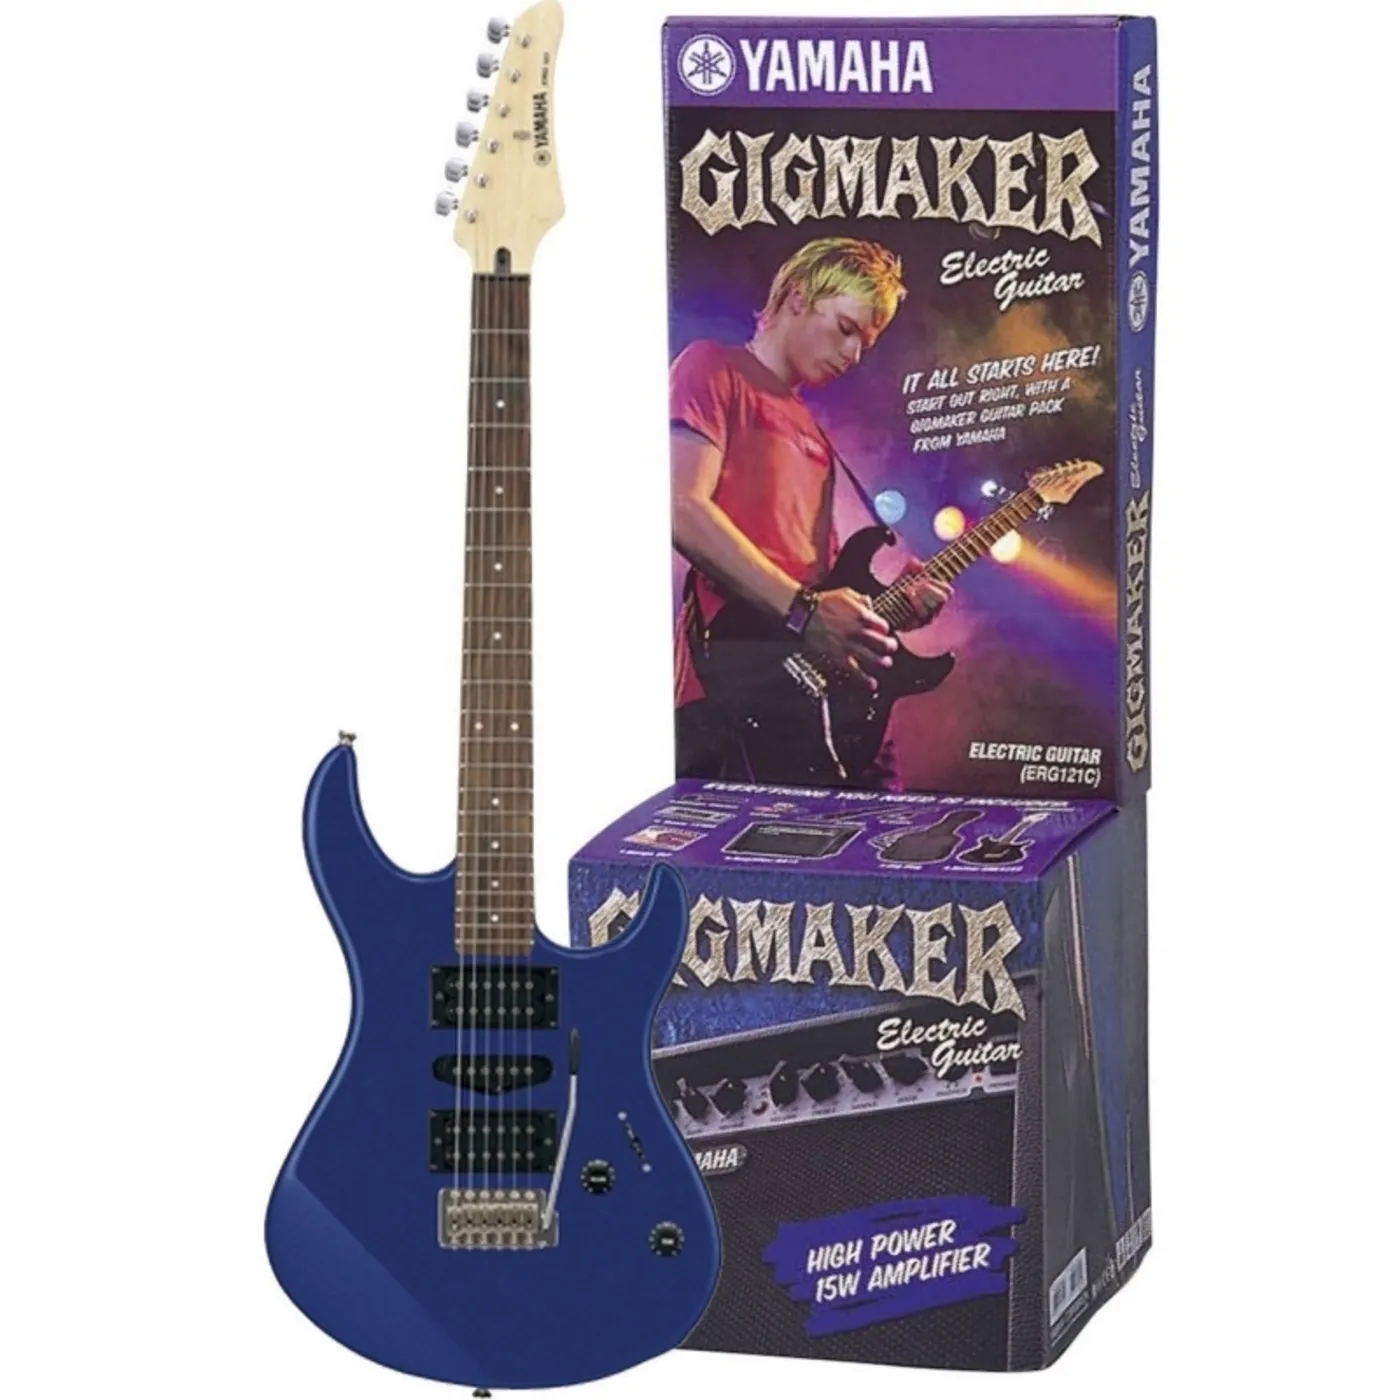 Kit de Guitarra Eléctrica YAMAHA con Amplificador ERG121GPII Azul